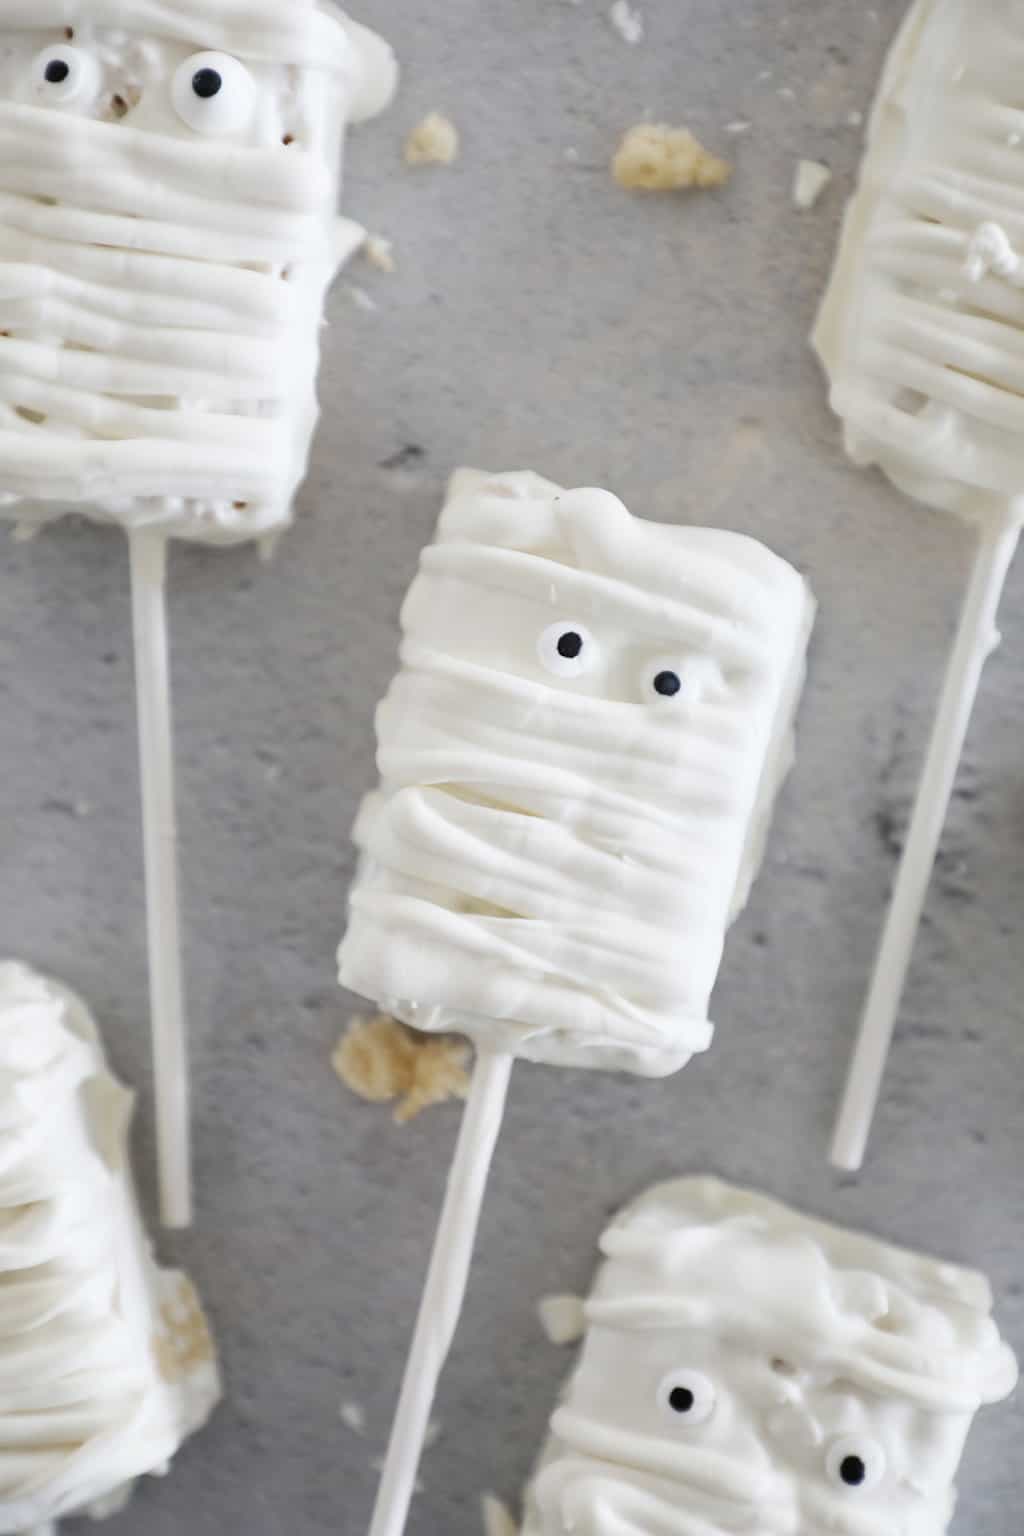 White chocolate covered mummy treats on baking sticks with candy eyes.